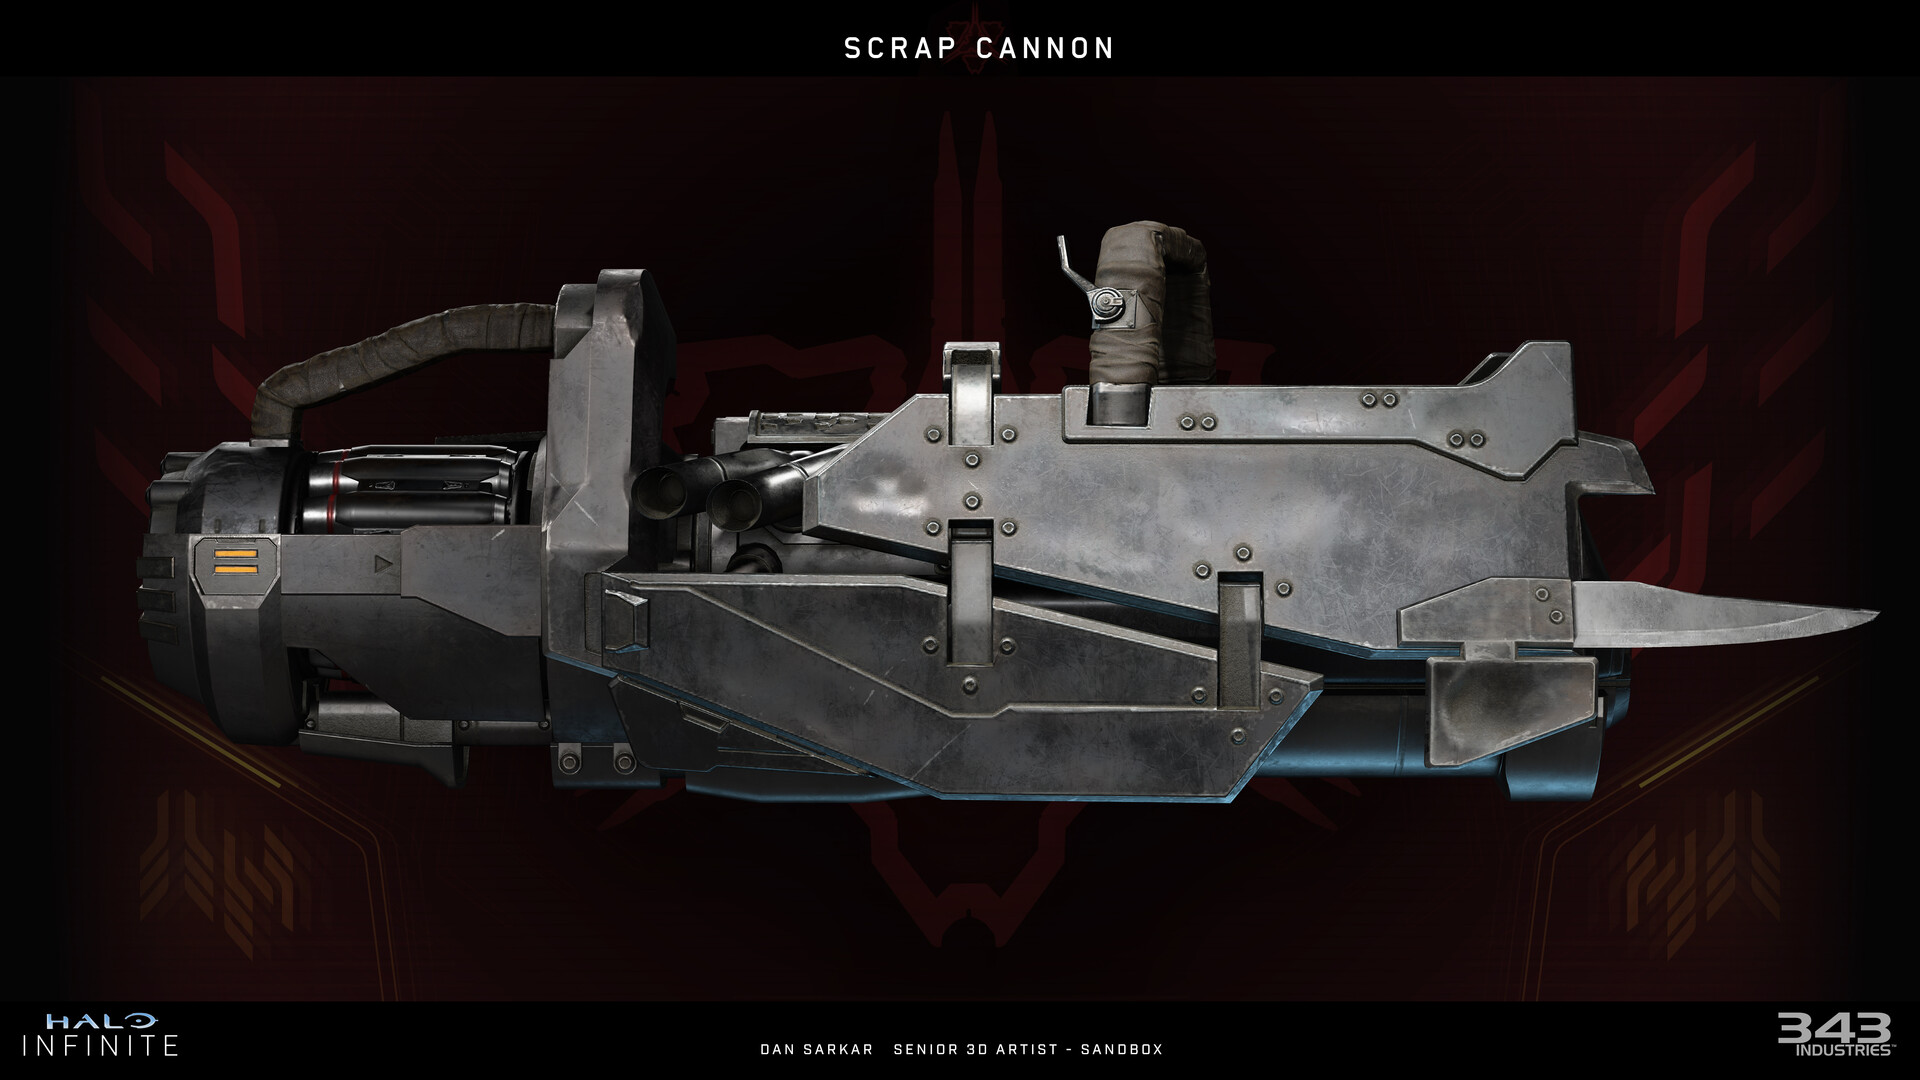 HINF-Scrap Cannon render 01 (Dan Sarkar).jpg